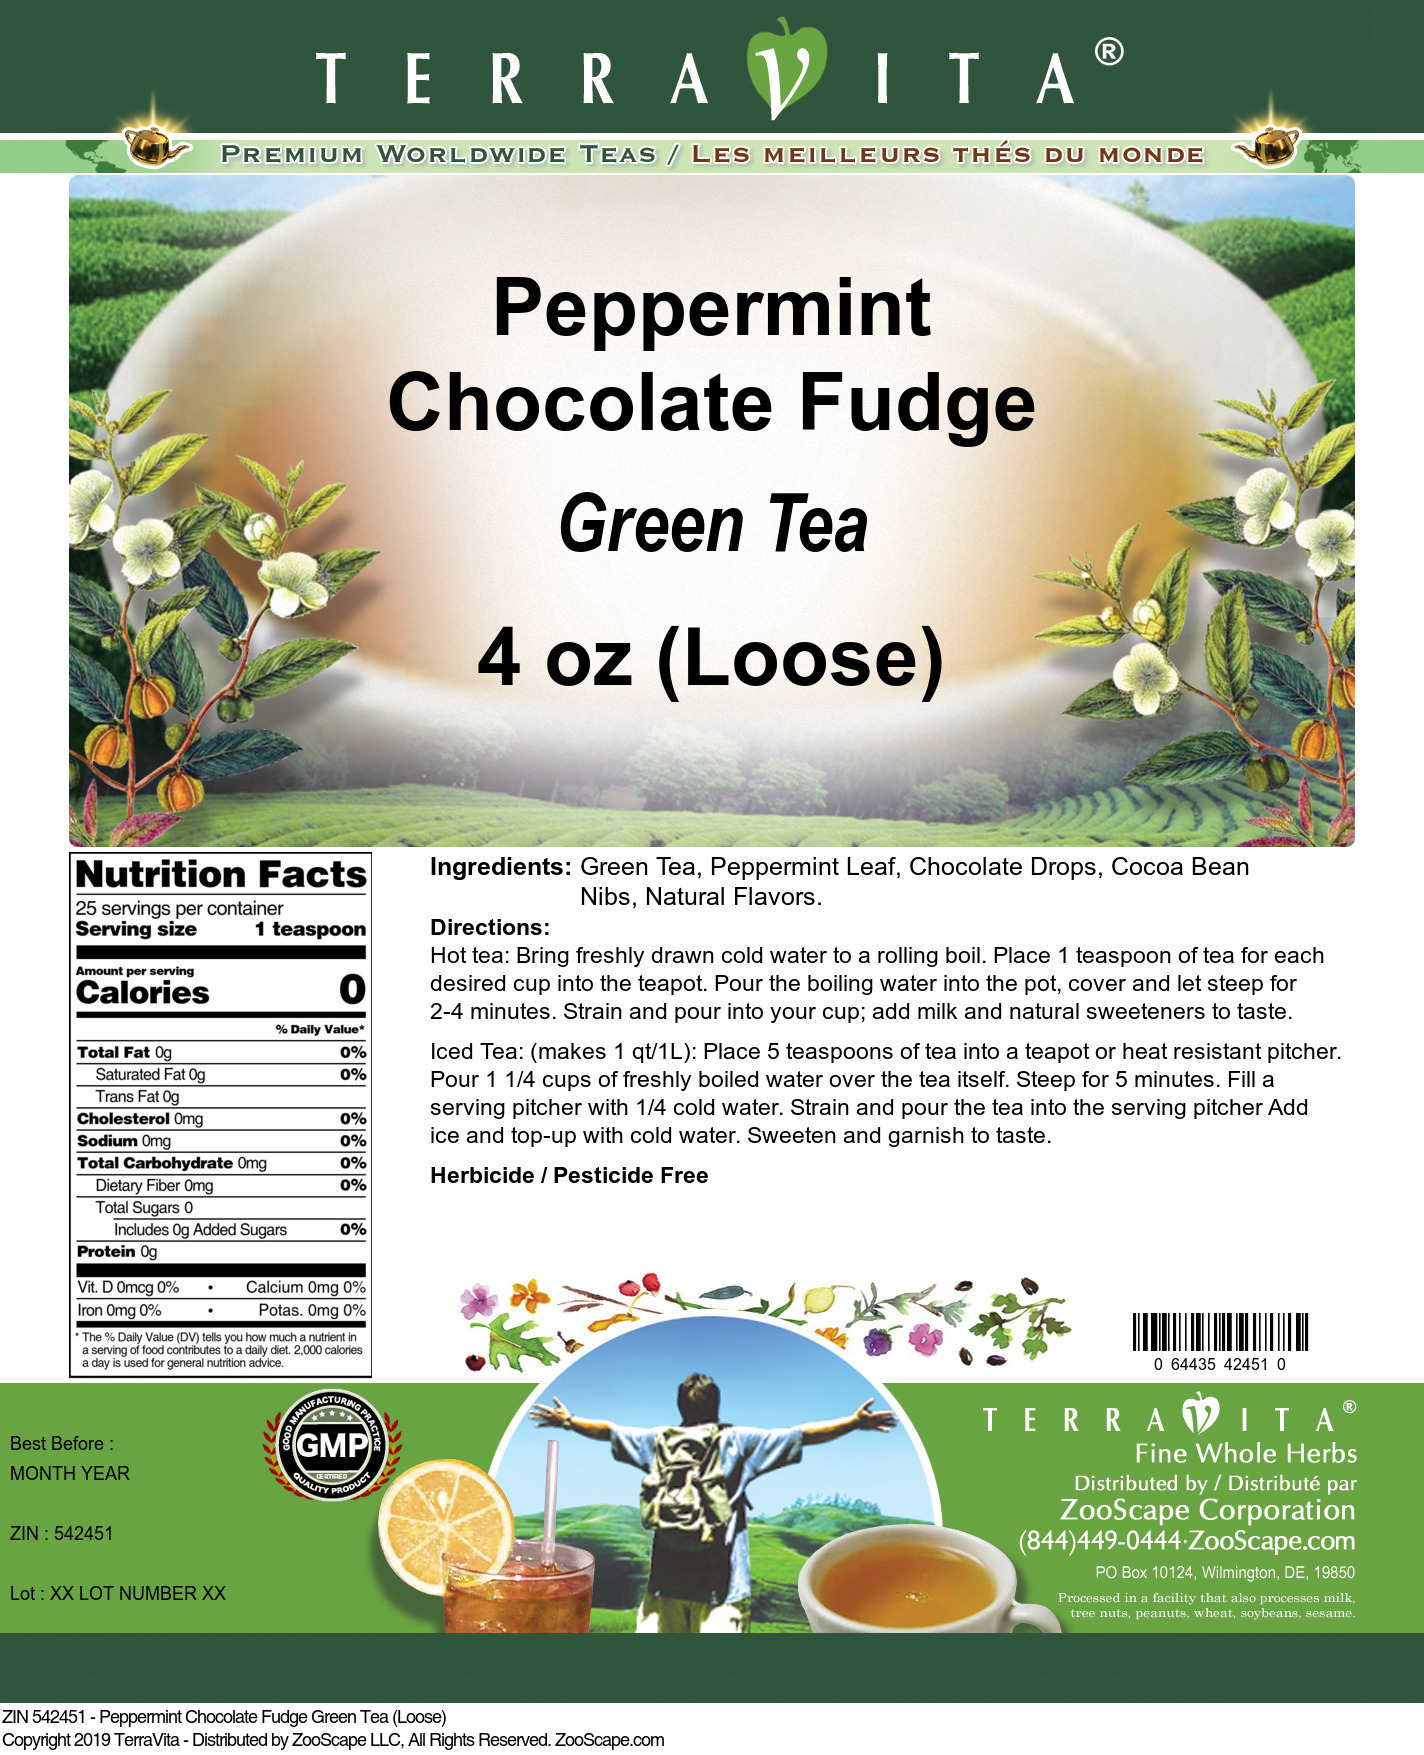 Peppermint Chocolate Fudge Green Tea (Loose) - Label